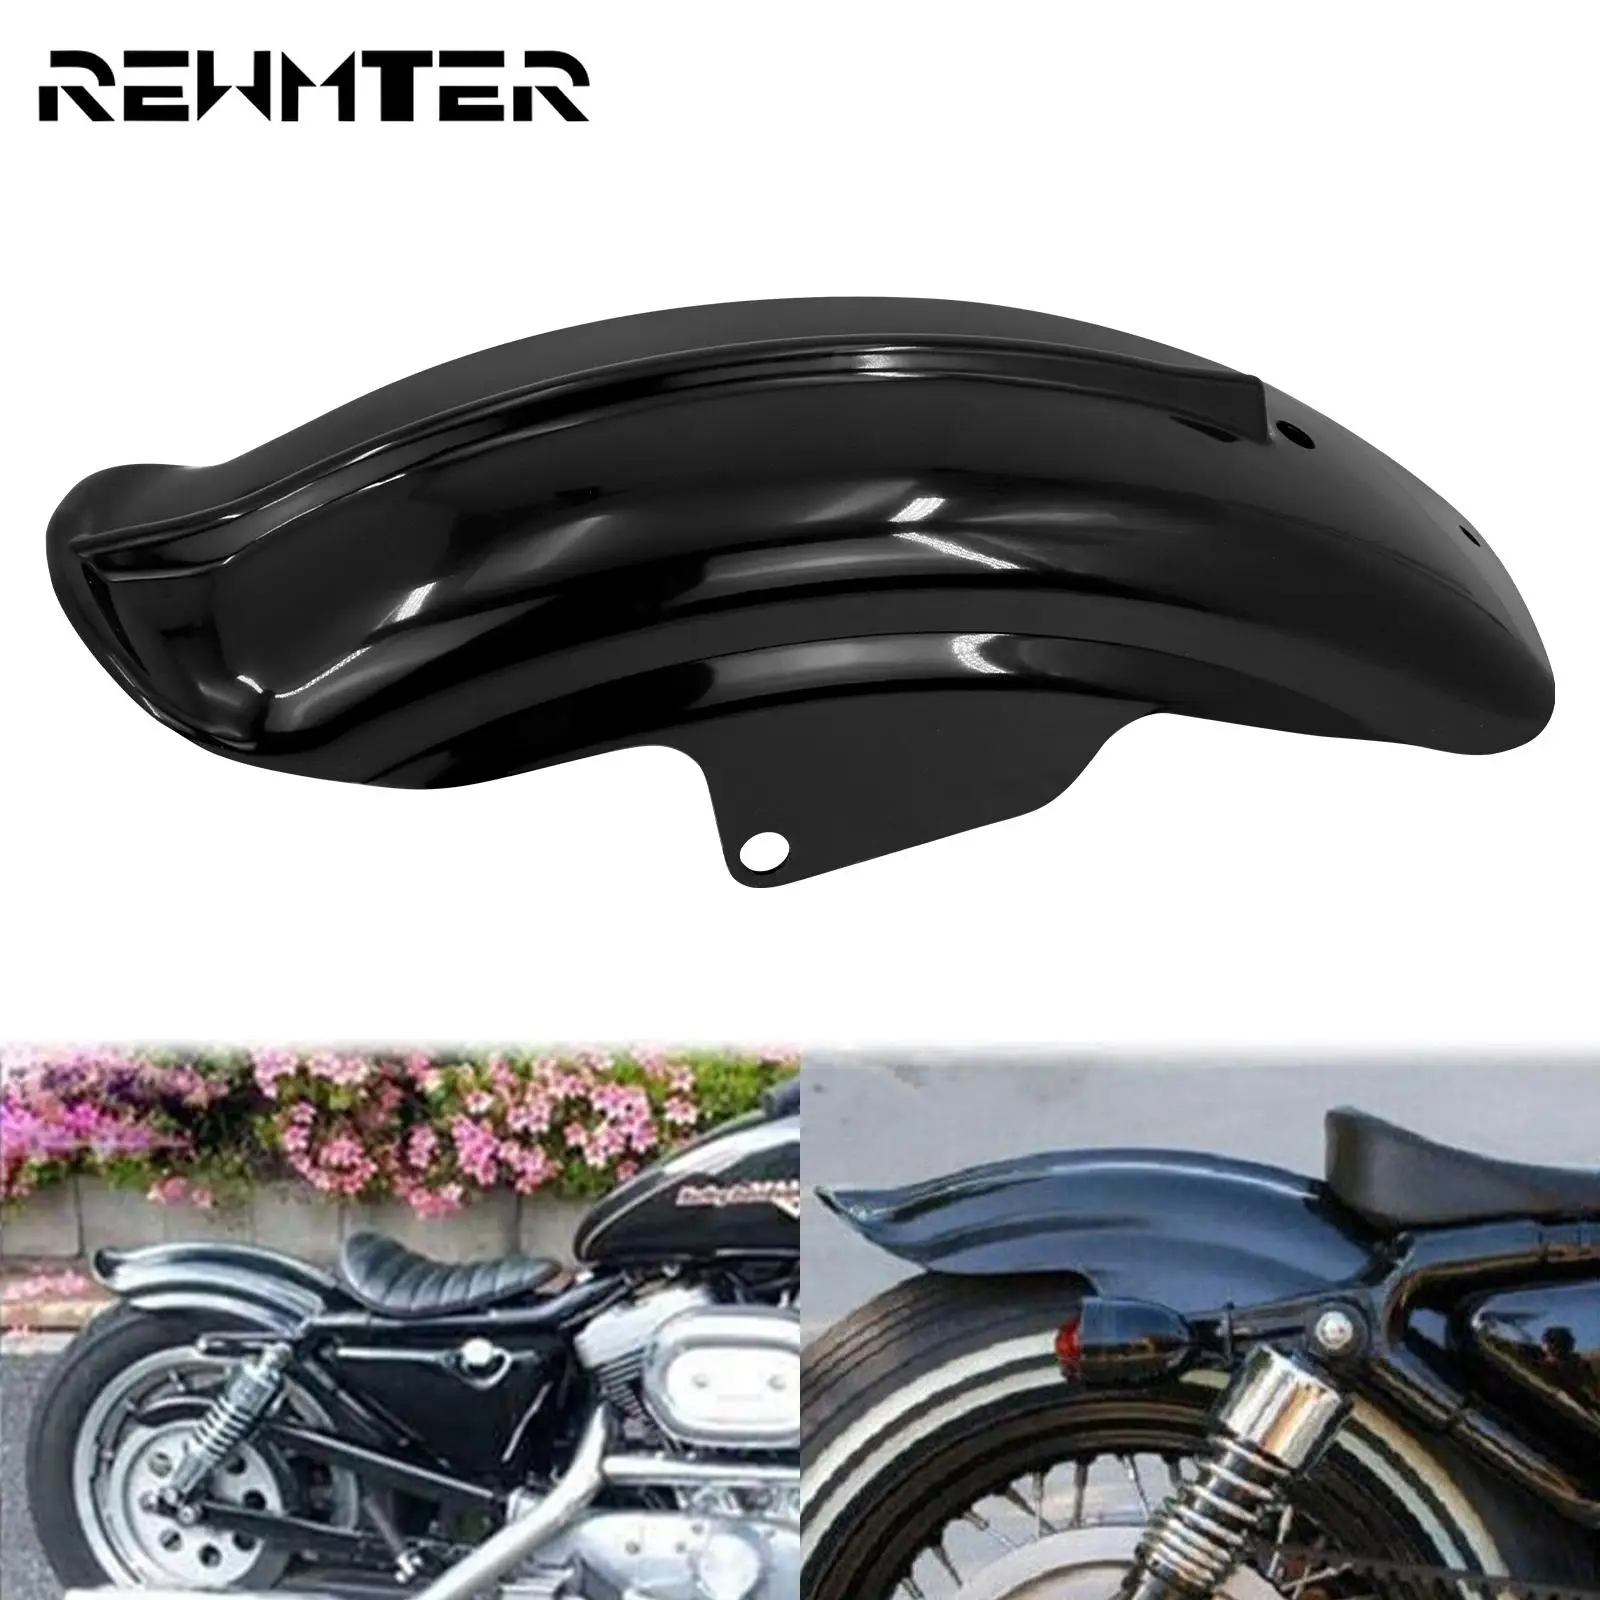 

Motorcycle Black Rear Mudguard Fender ABS For Harley Sportster 883 XL 1200 Cafe Racer Solo Bobber Chopper Super Low Roadster